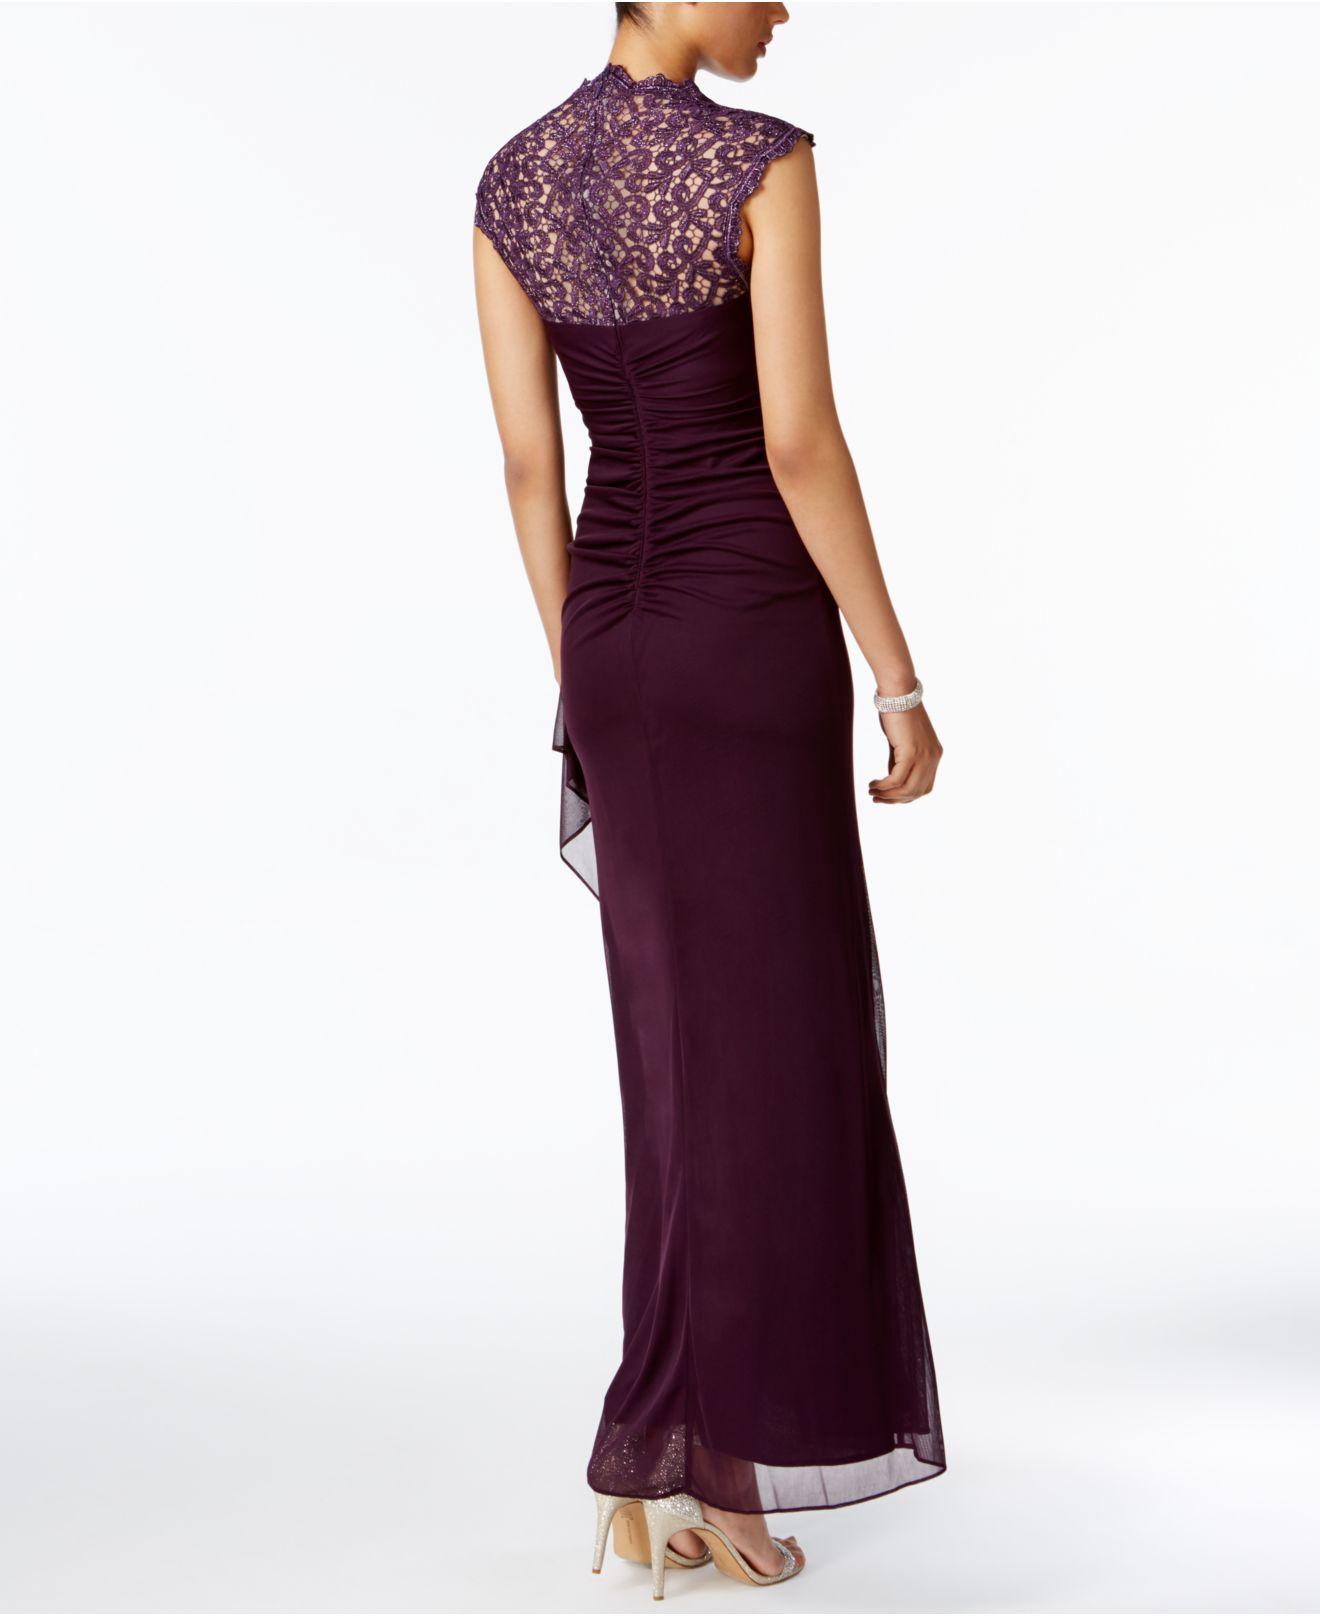 Xscape Lace Stand-collar Illusion Back Gown in Plum Purple (Purple 